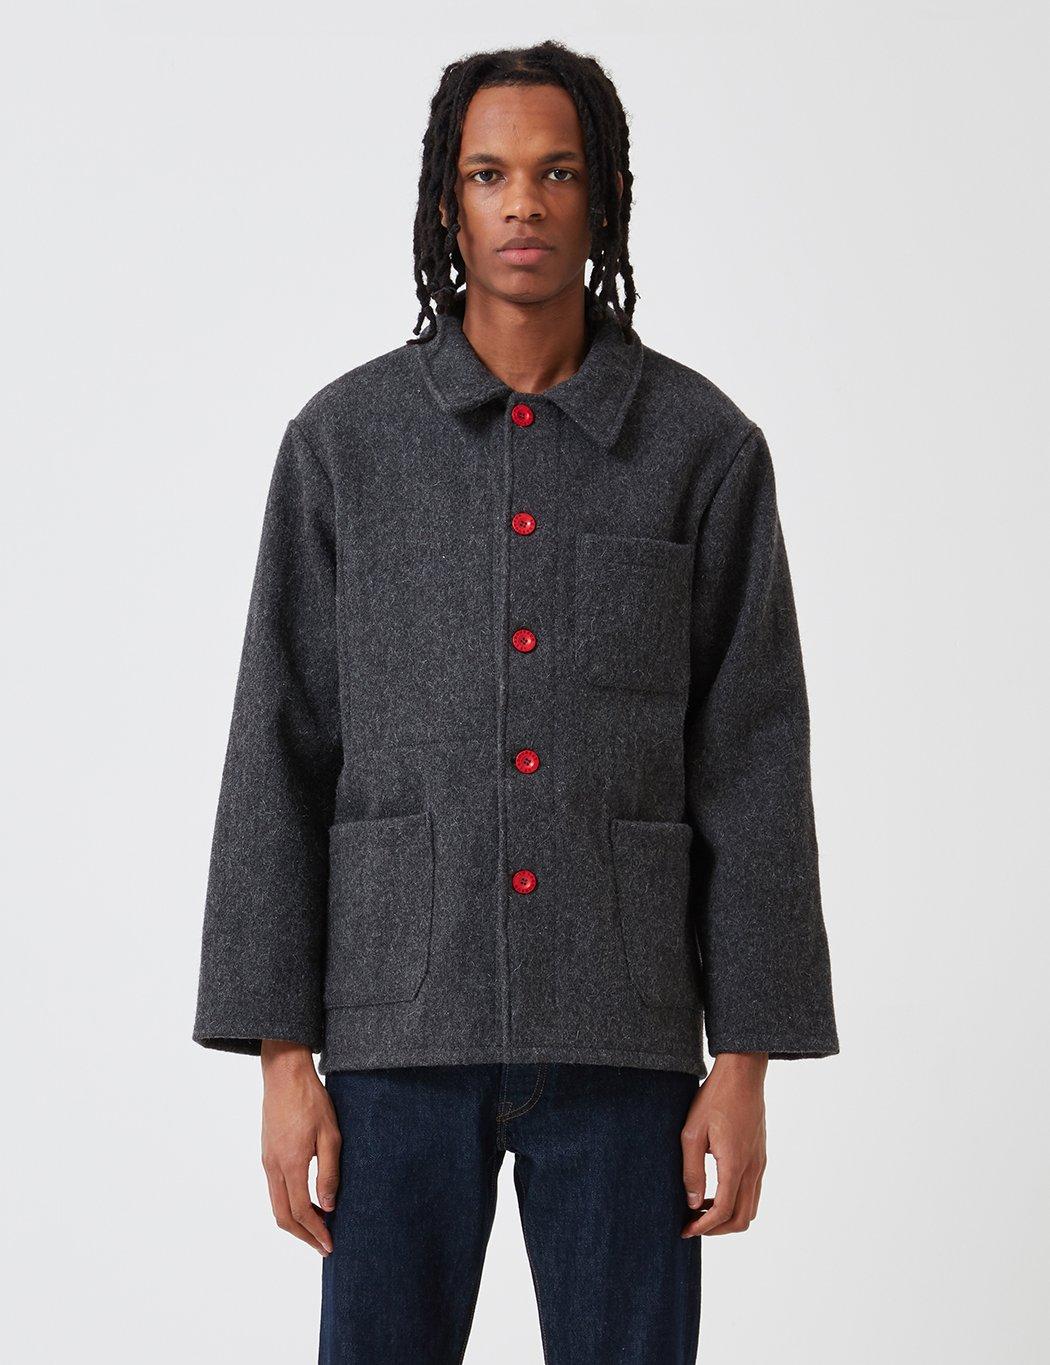 Le Laboureur Wool Work Jacket in Grey (Grey) for Men - Lyst